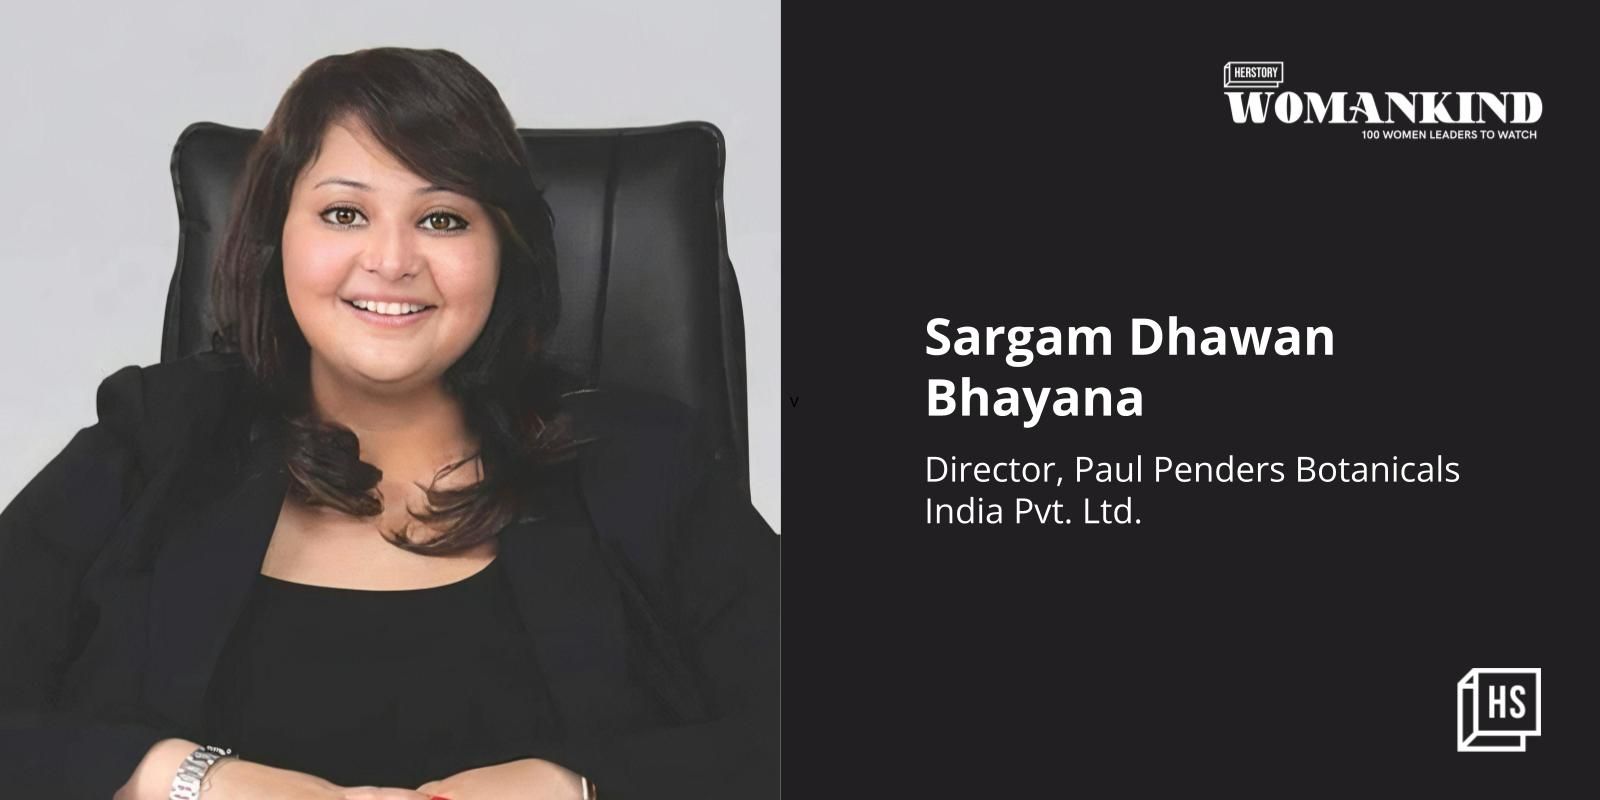 [100 Emerging Women Leaders] Meet first-generation beauty entrepreneur Sargam Dhawan Bhayana 
